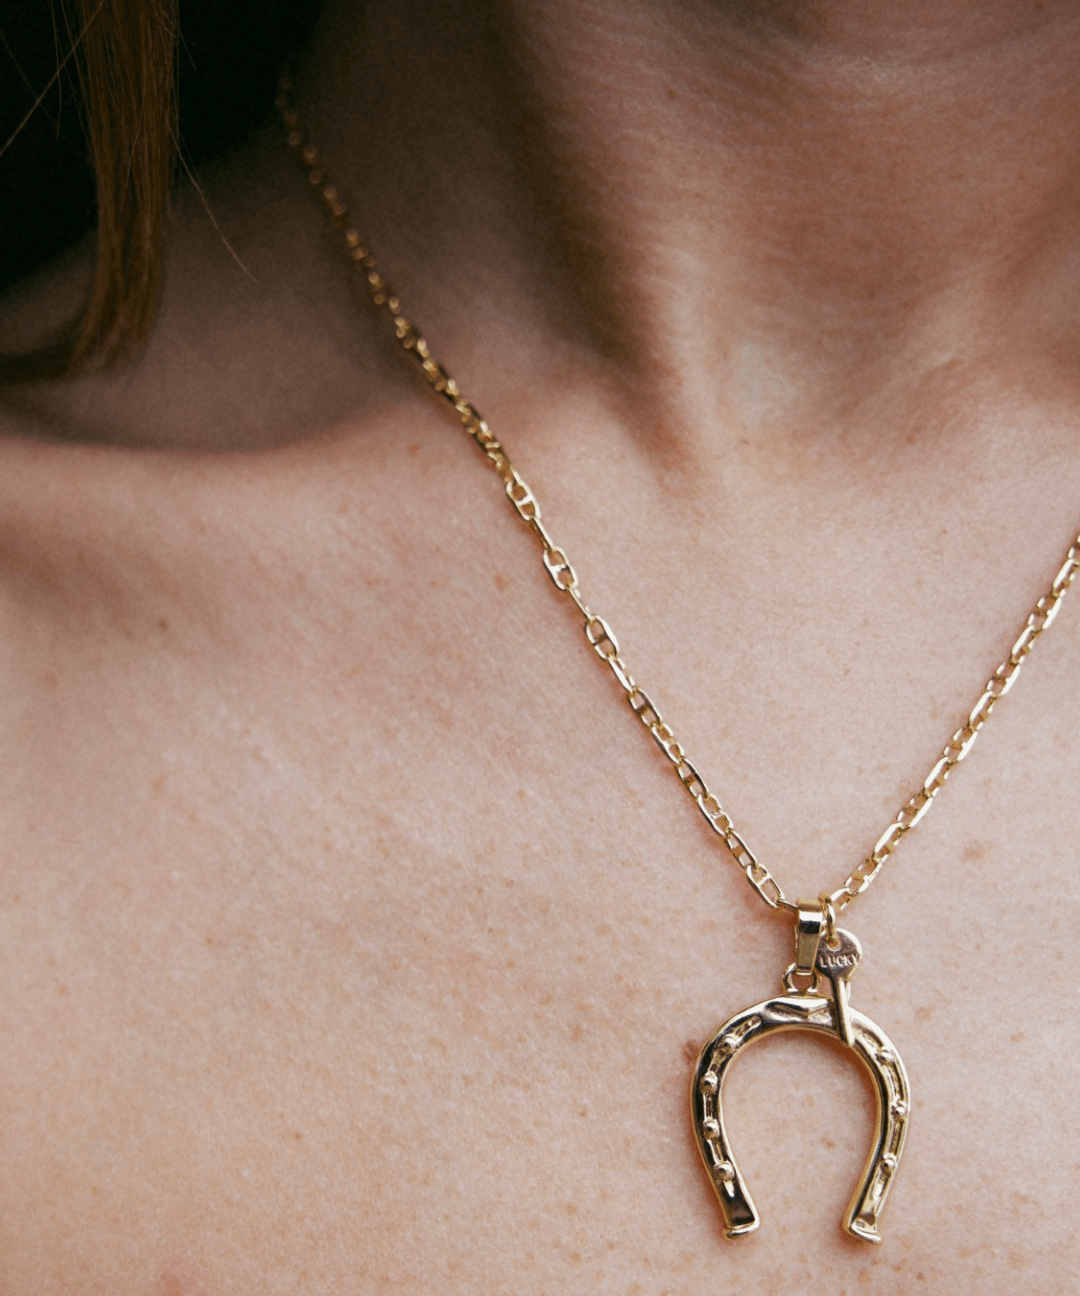 Horseshoe and Mini Key Necklace Necklaces The Giving Keys 